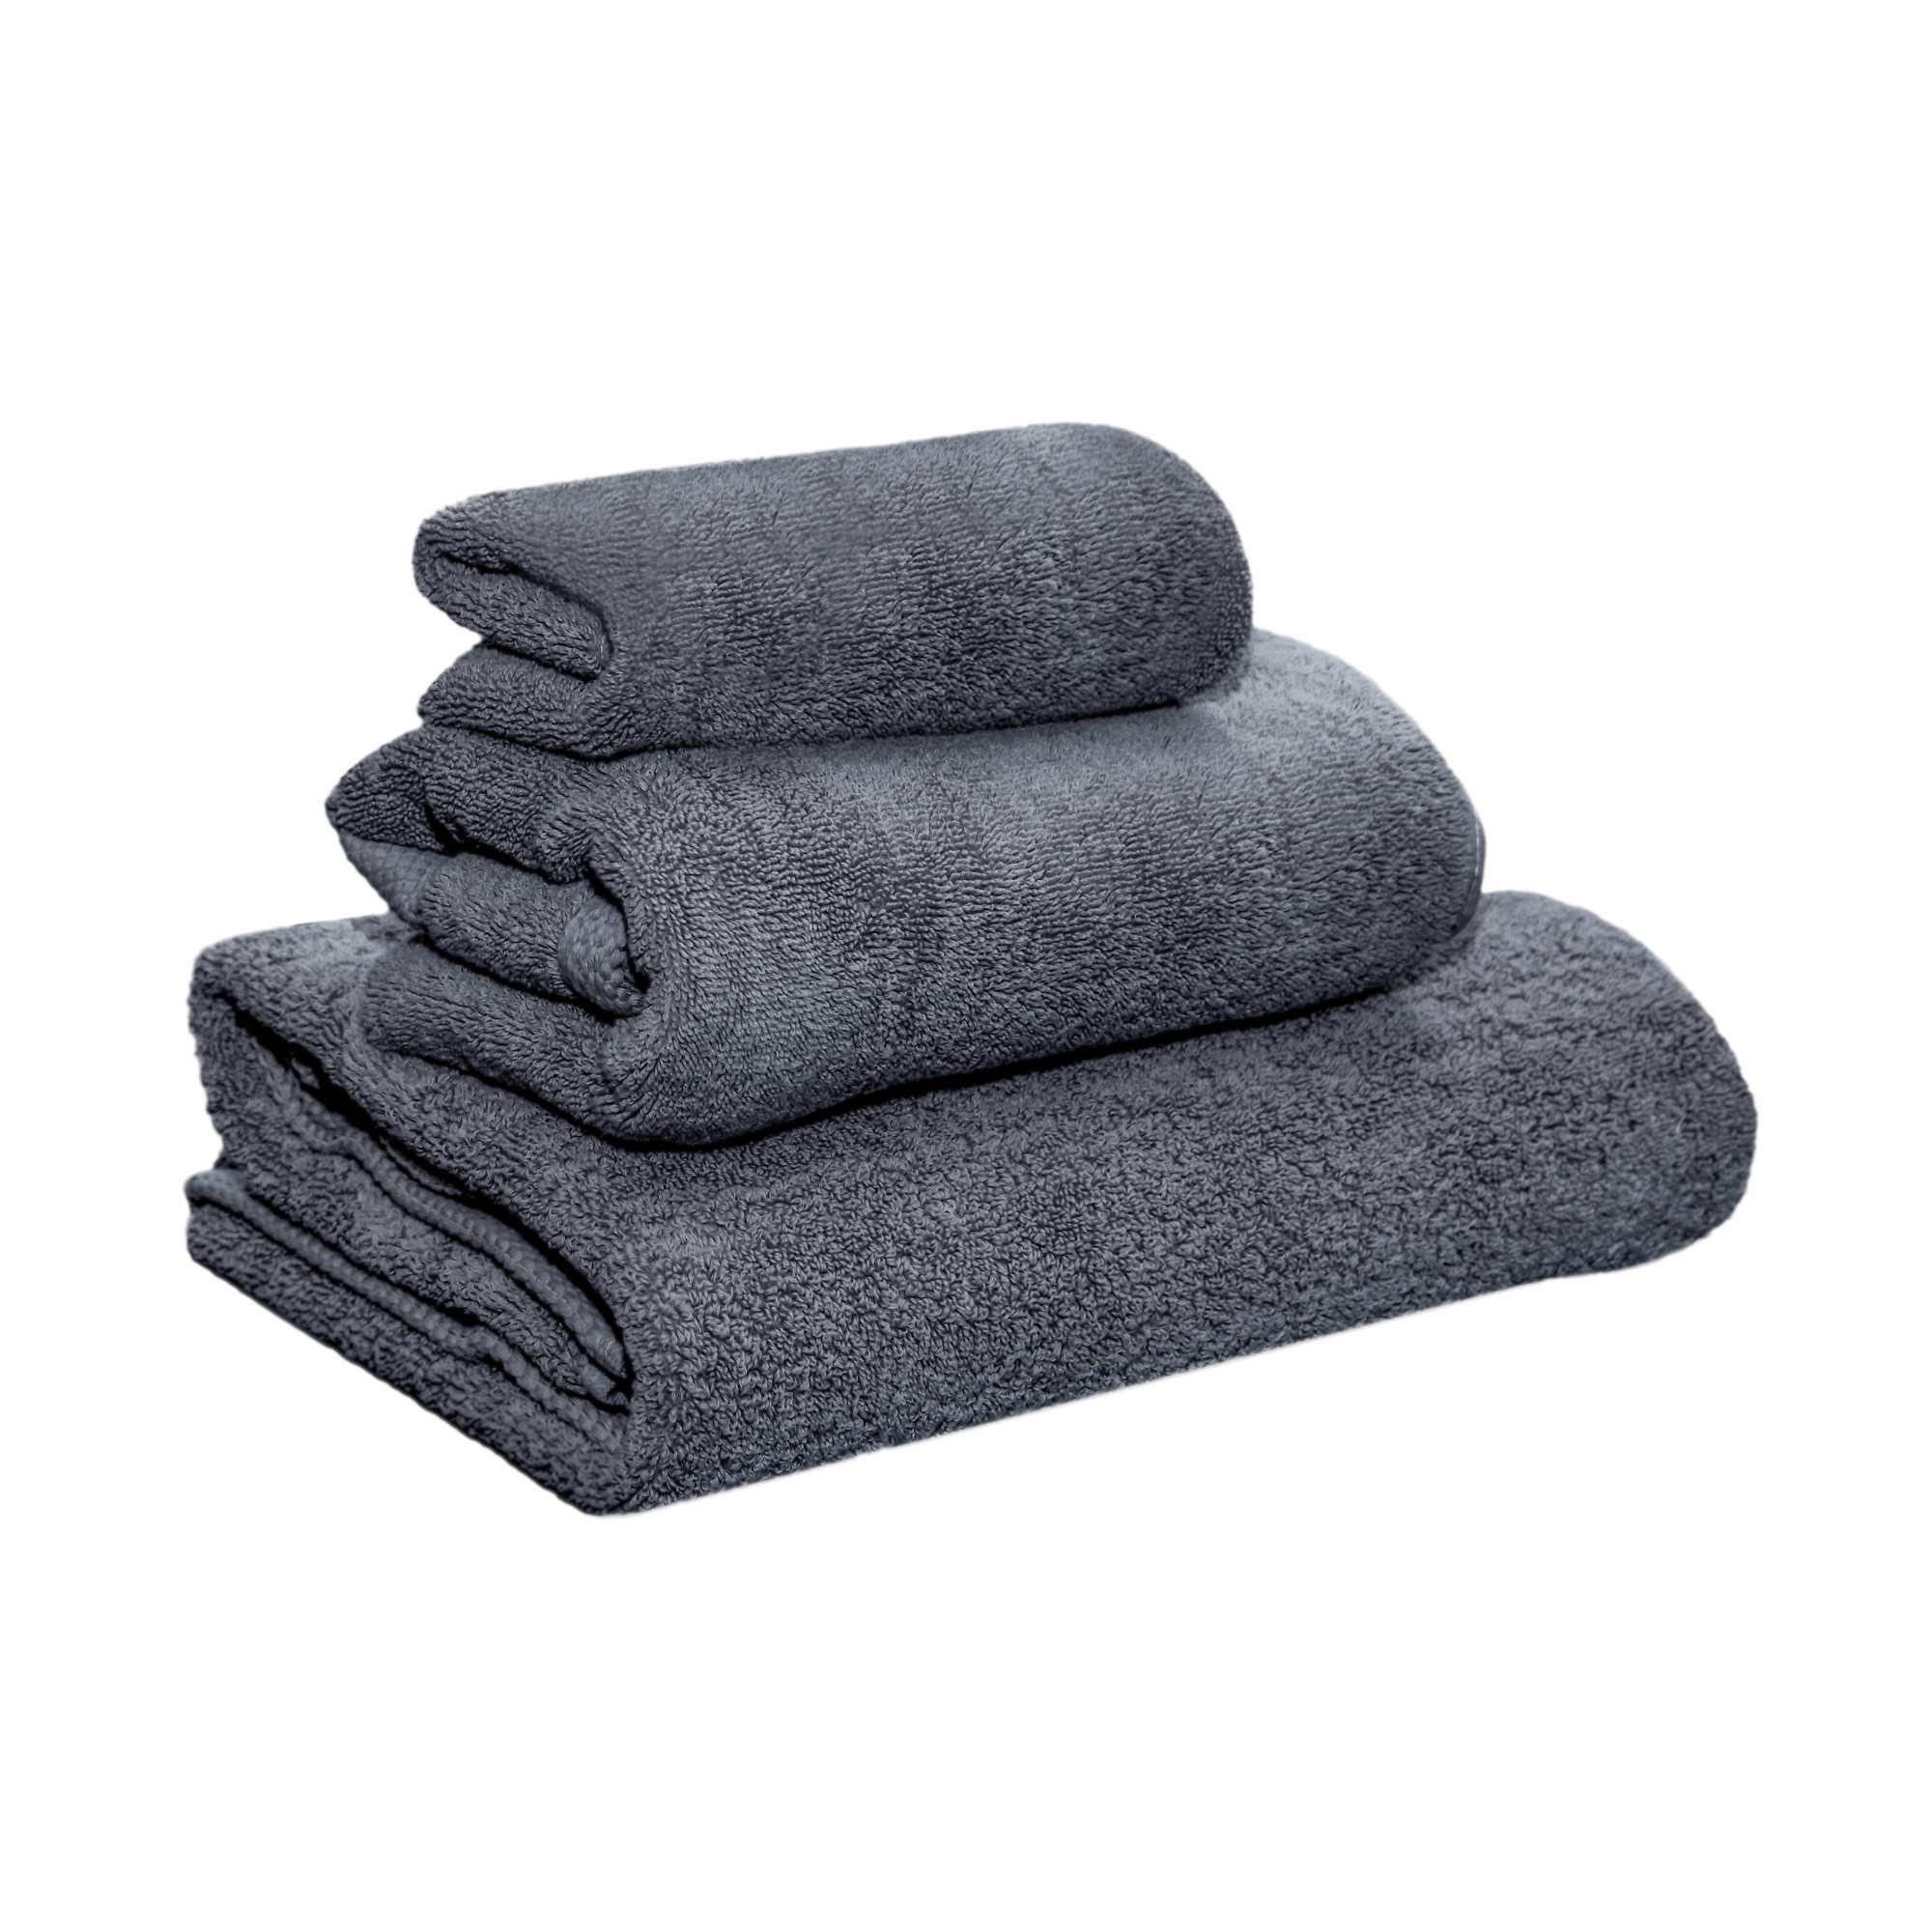 Terry towel 70X140, dark asphalt, 100% cotton